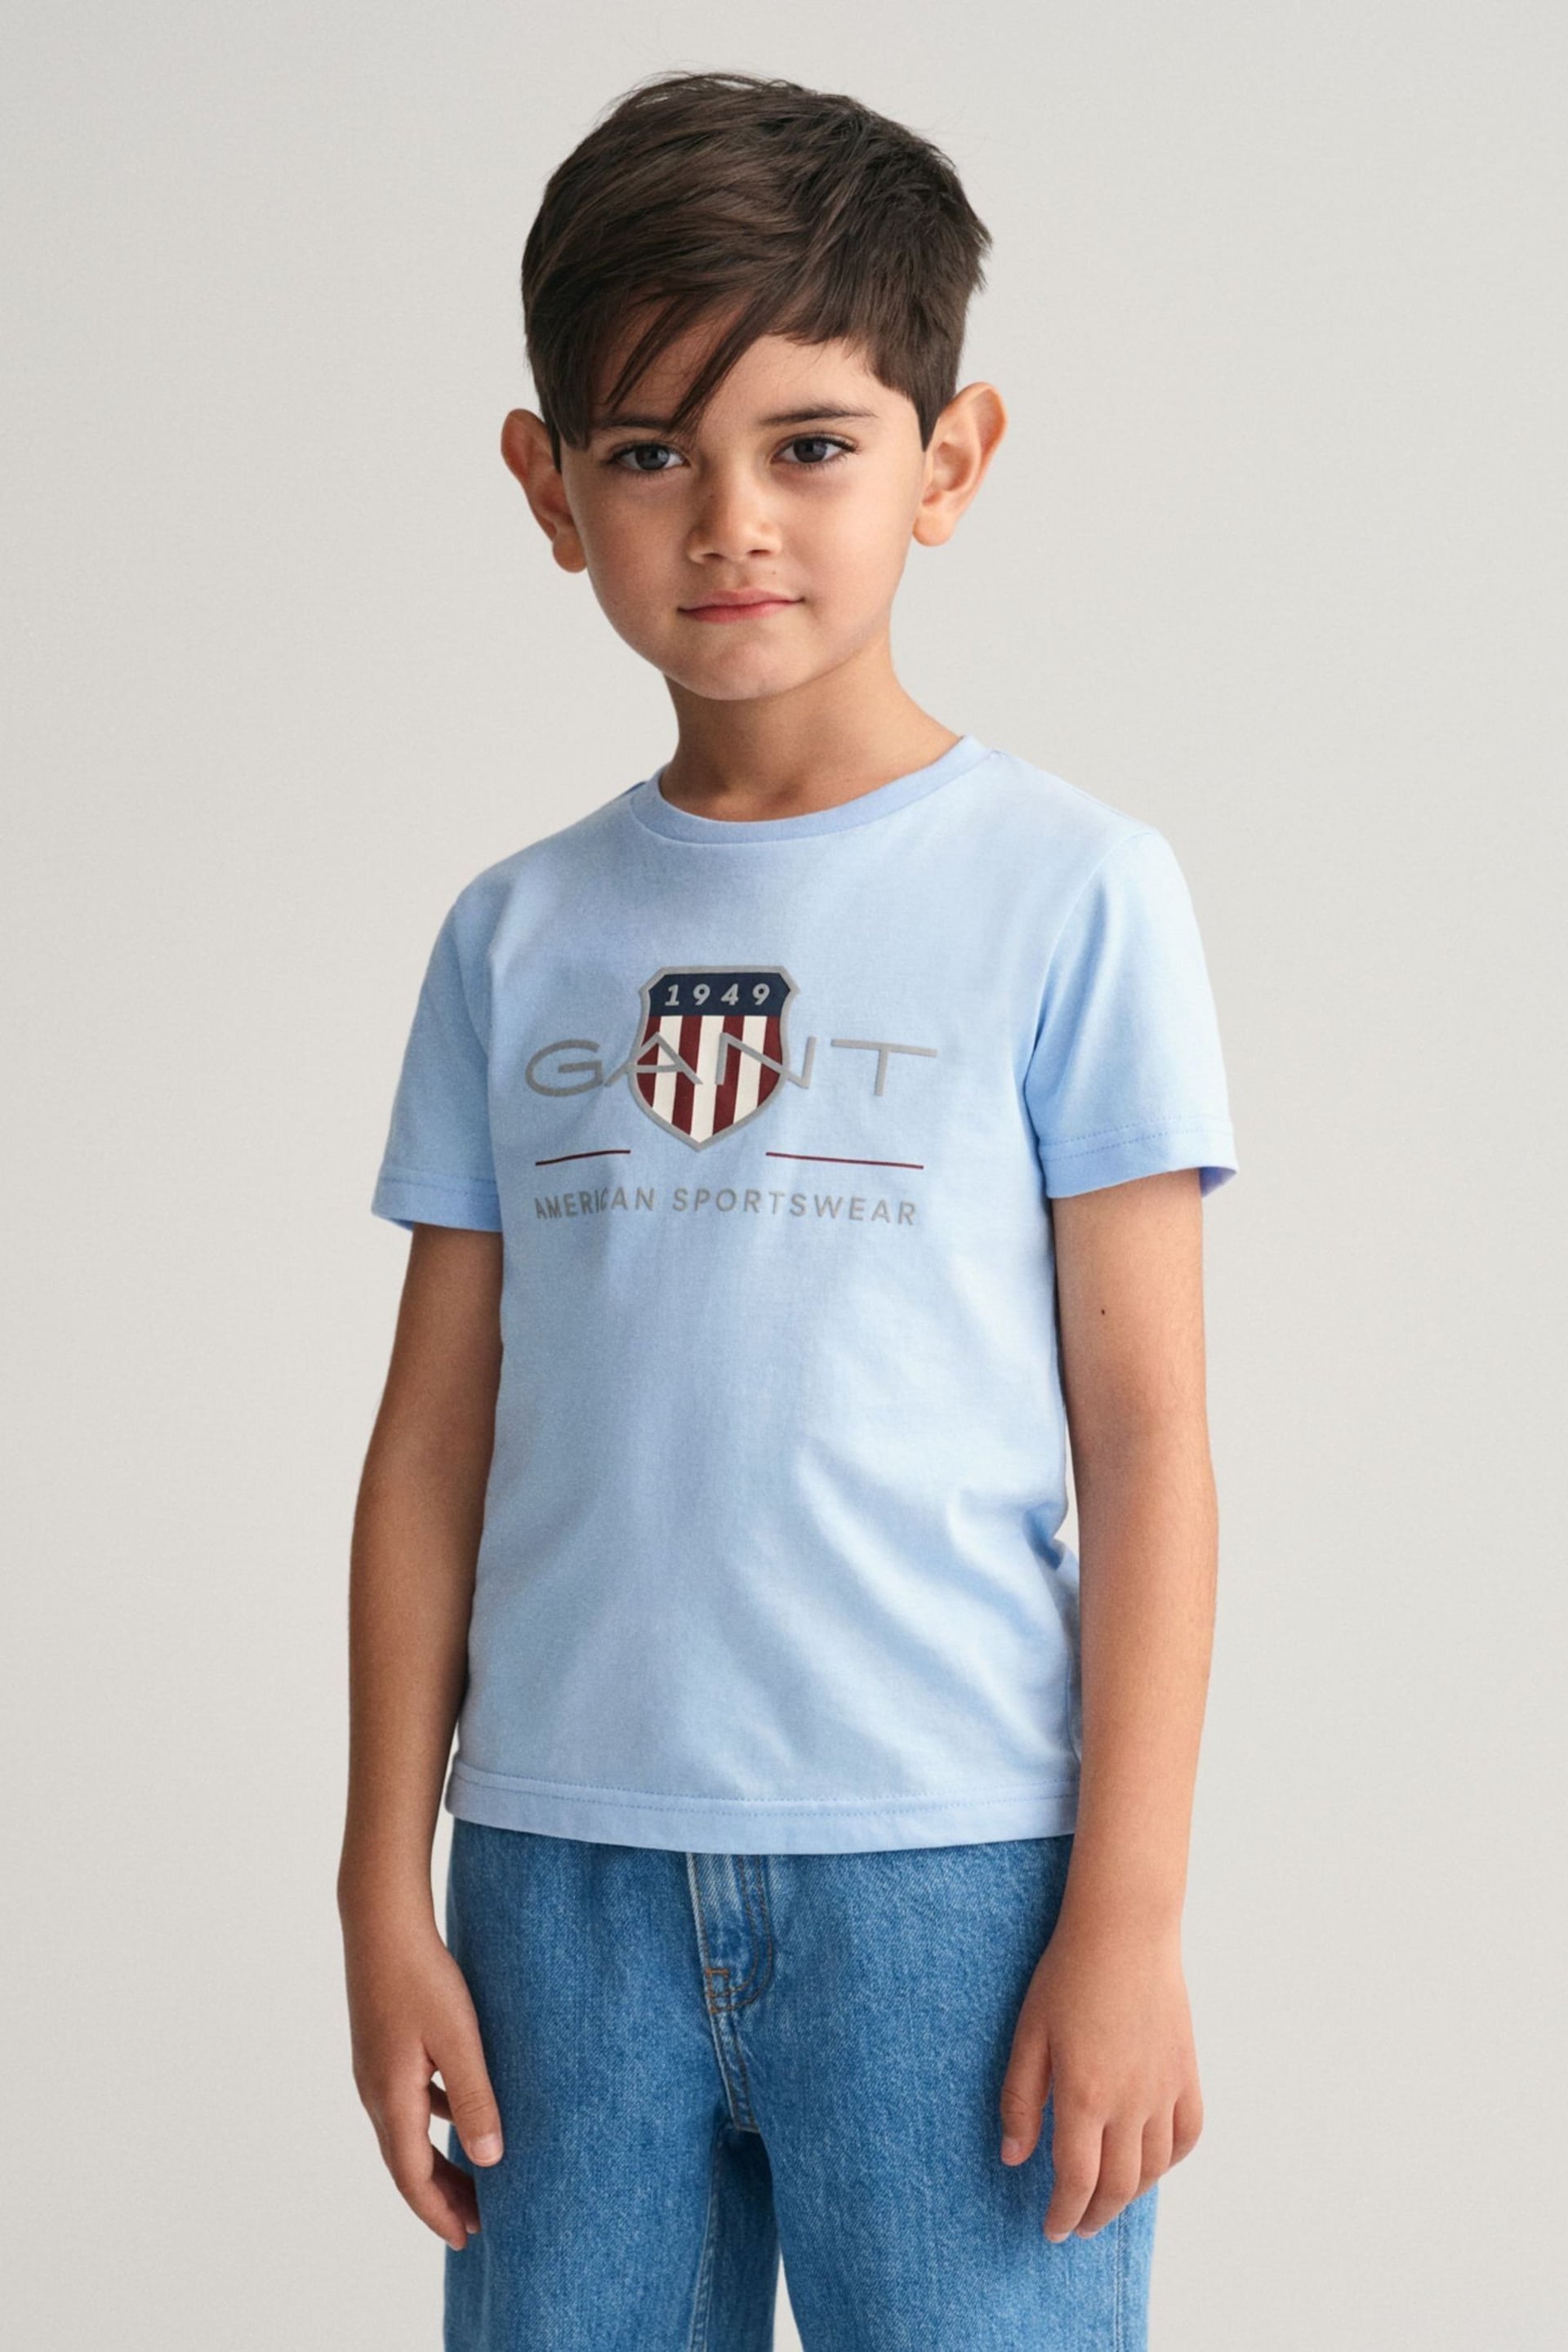 GANT Kids Archive Shield T-Shirt - Image 1 of 6